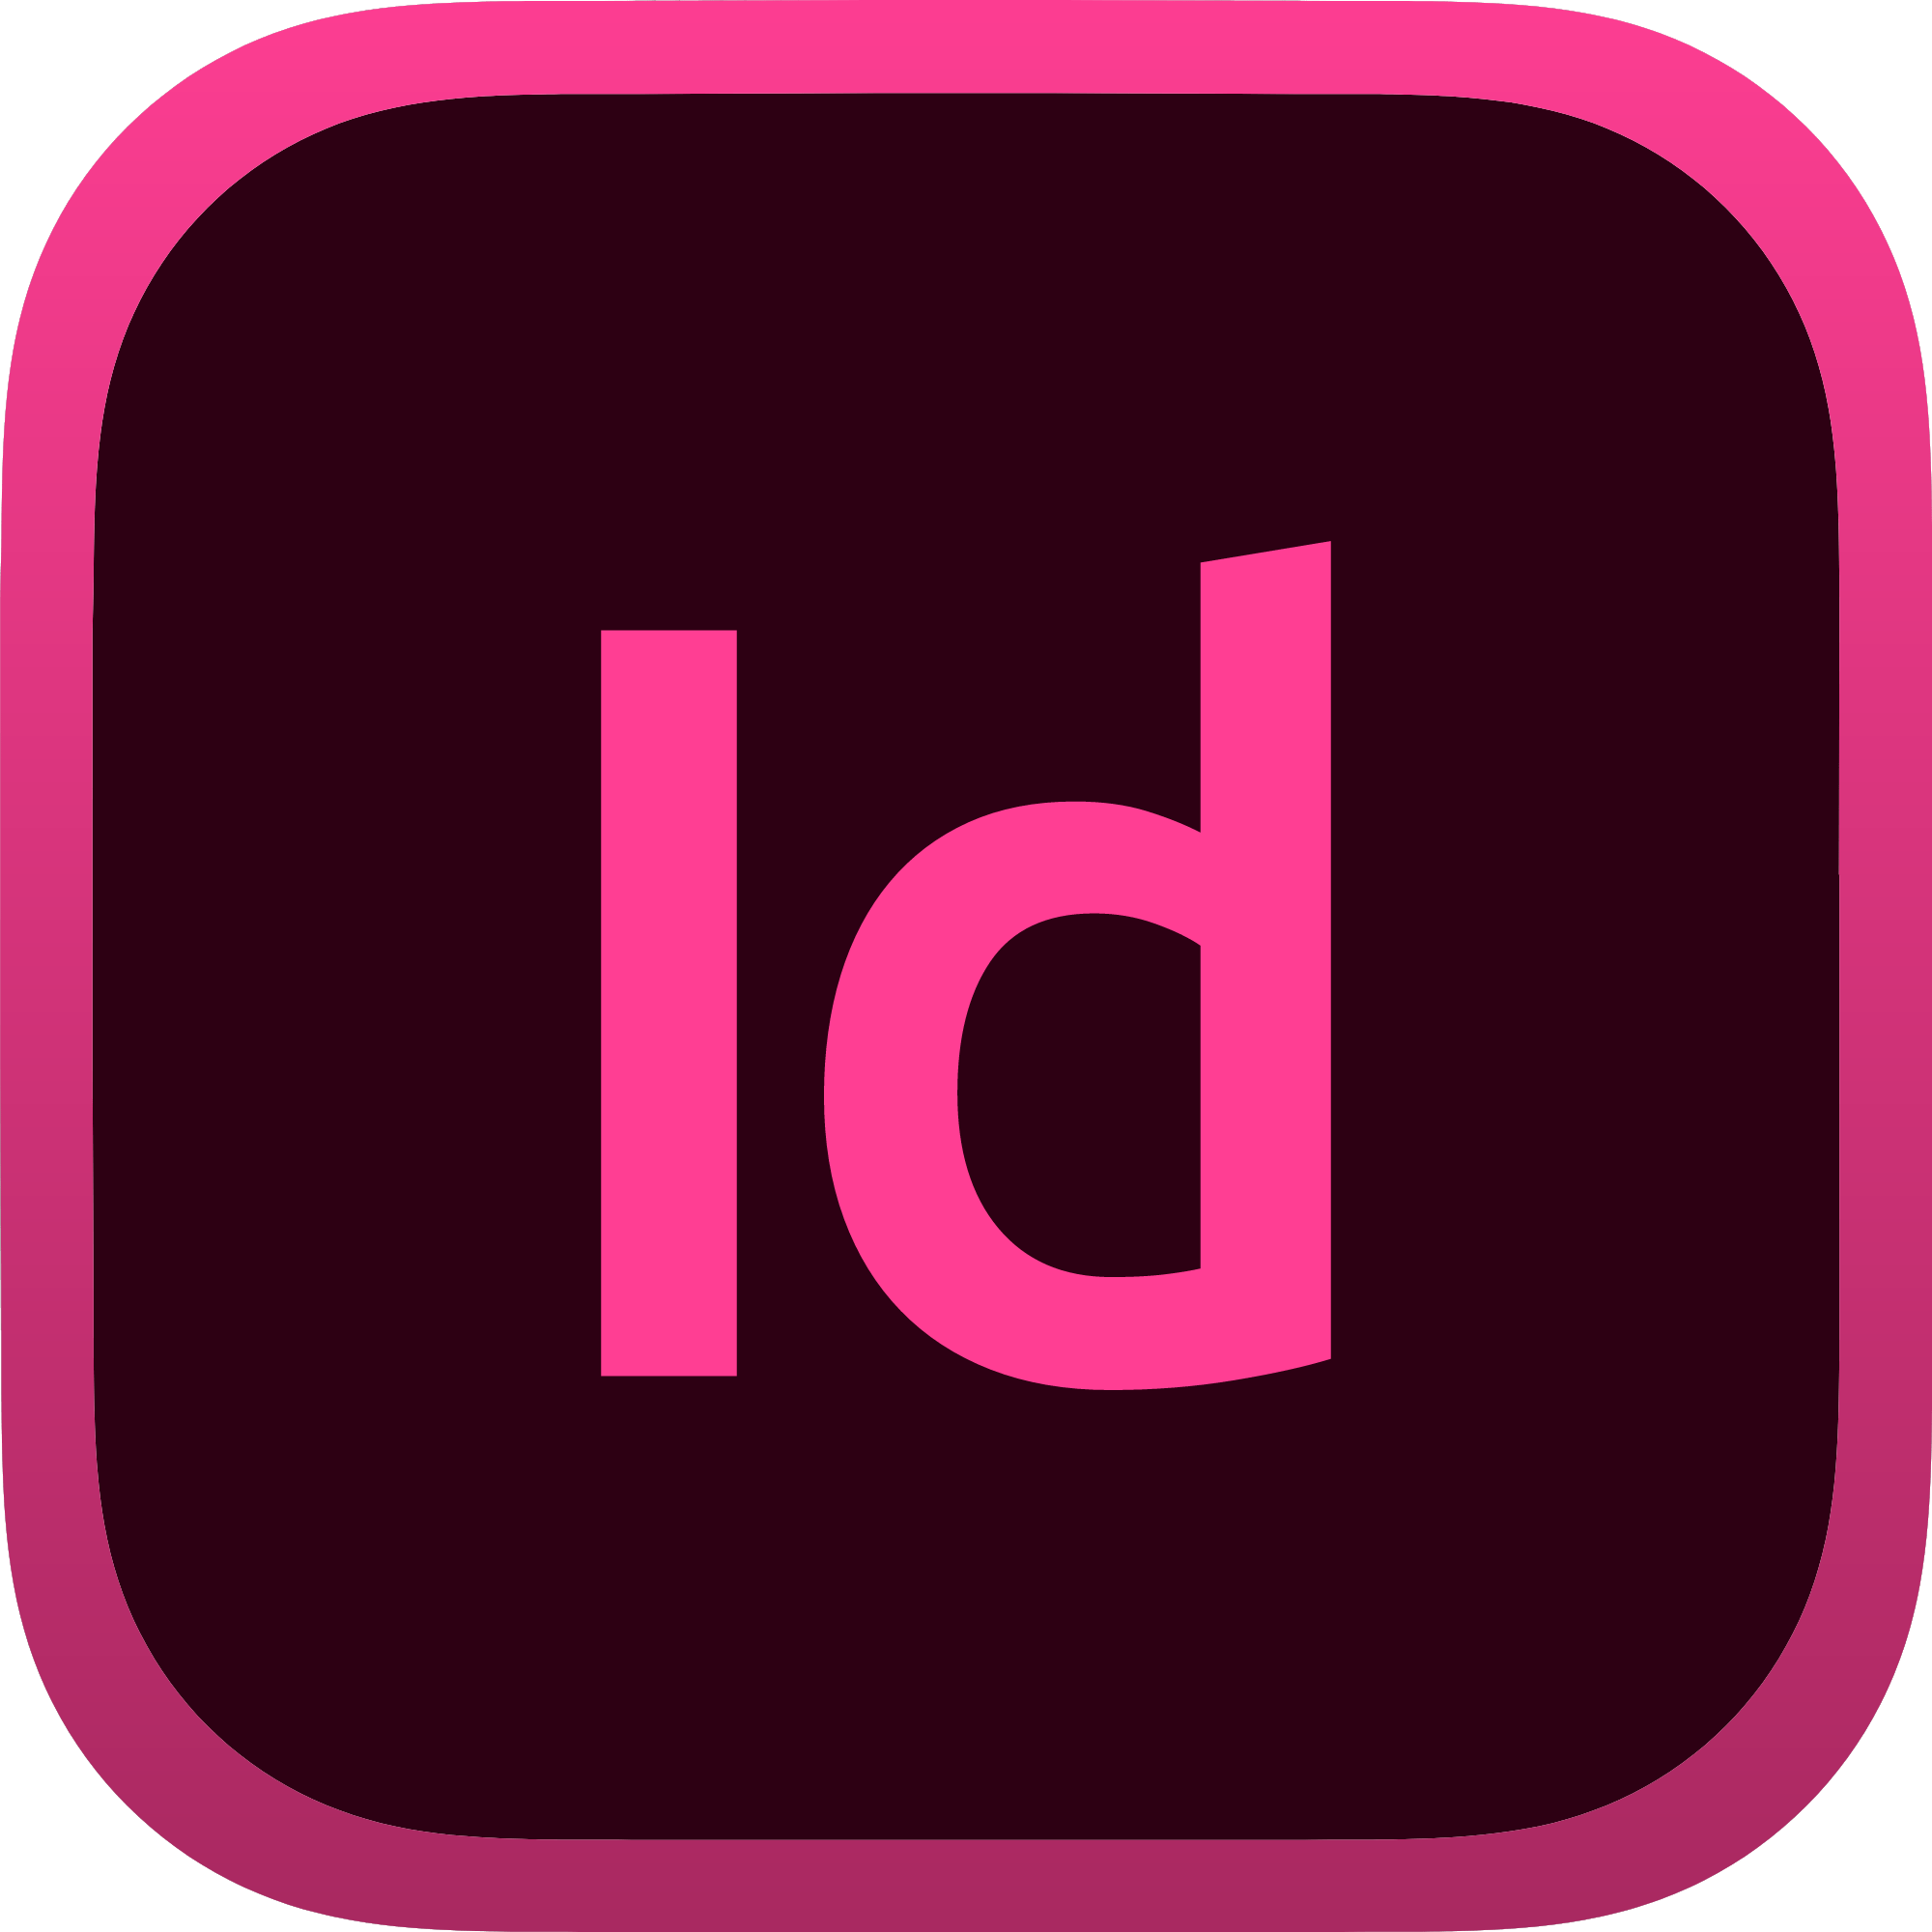 Adobe indesign icon